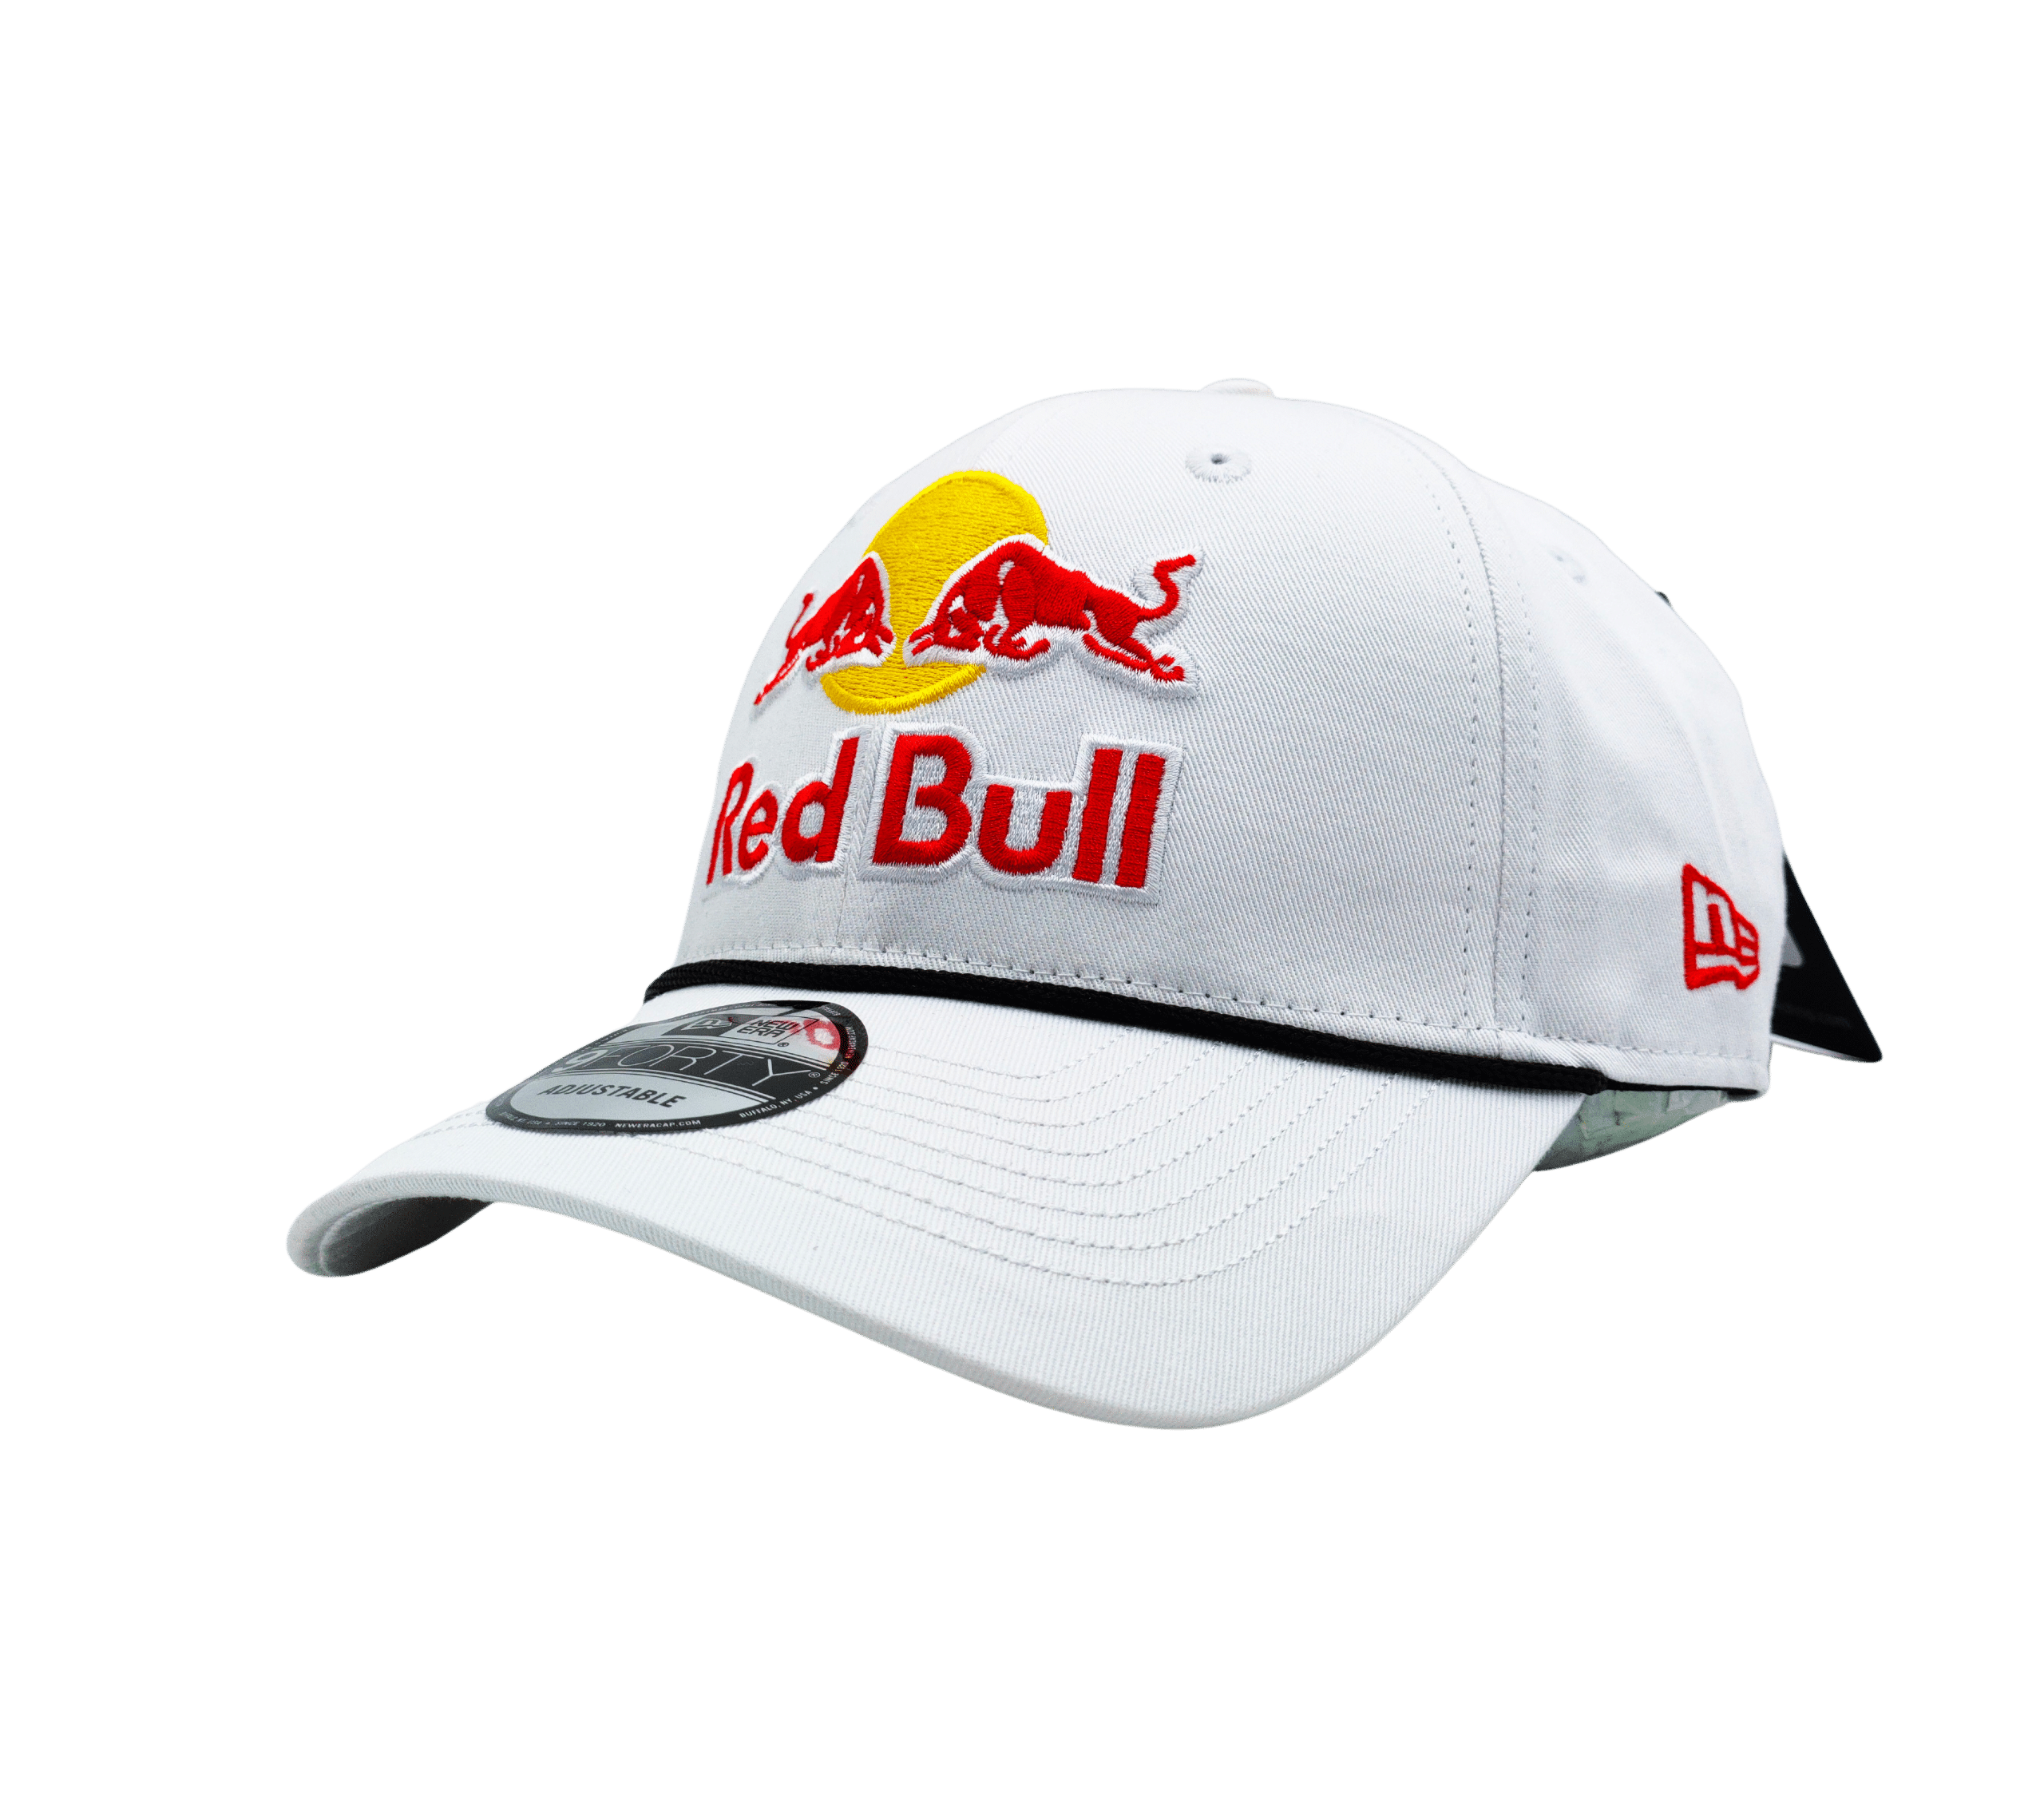 Red Bull Hats, Caps, Snapback, Bucket Hat - Buy Online at Wear Hat